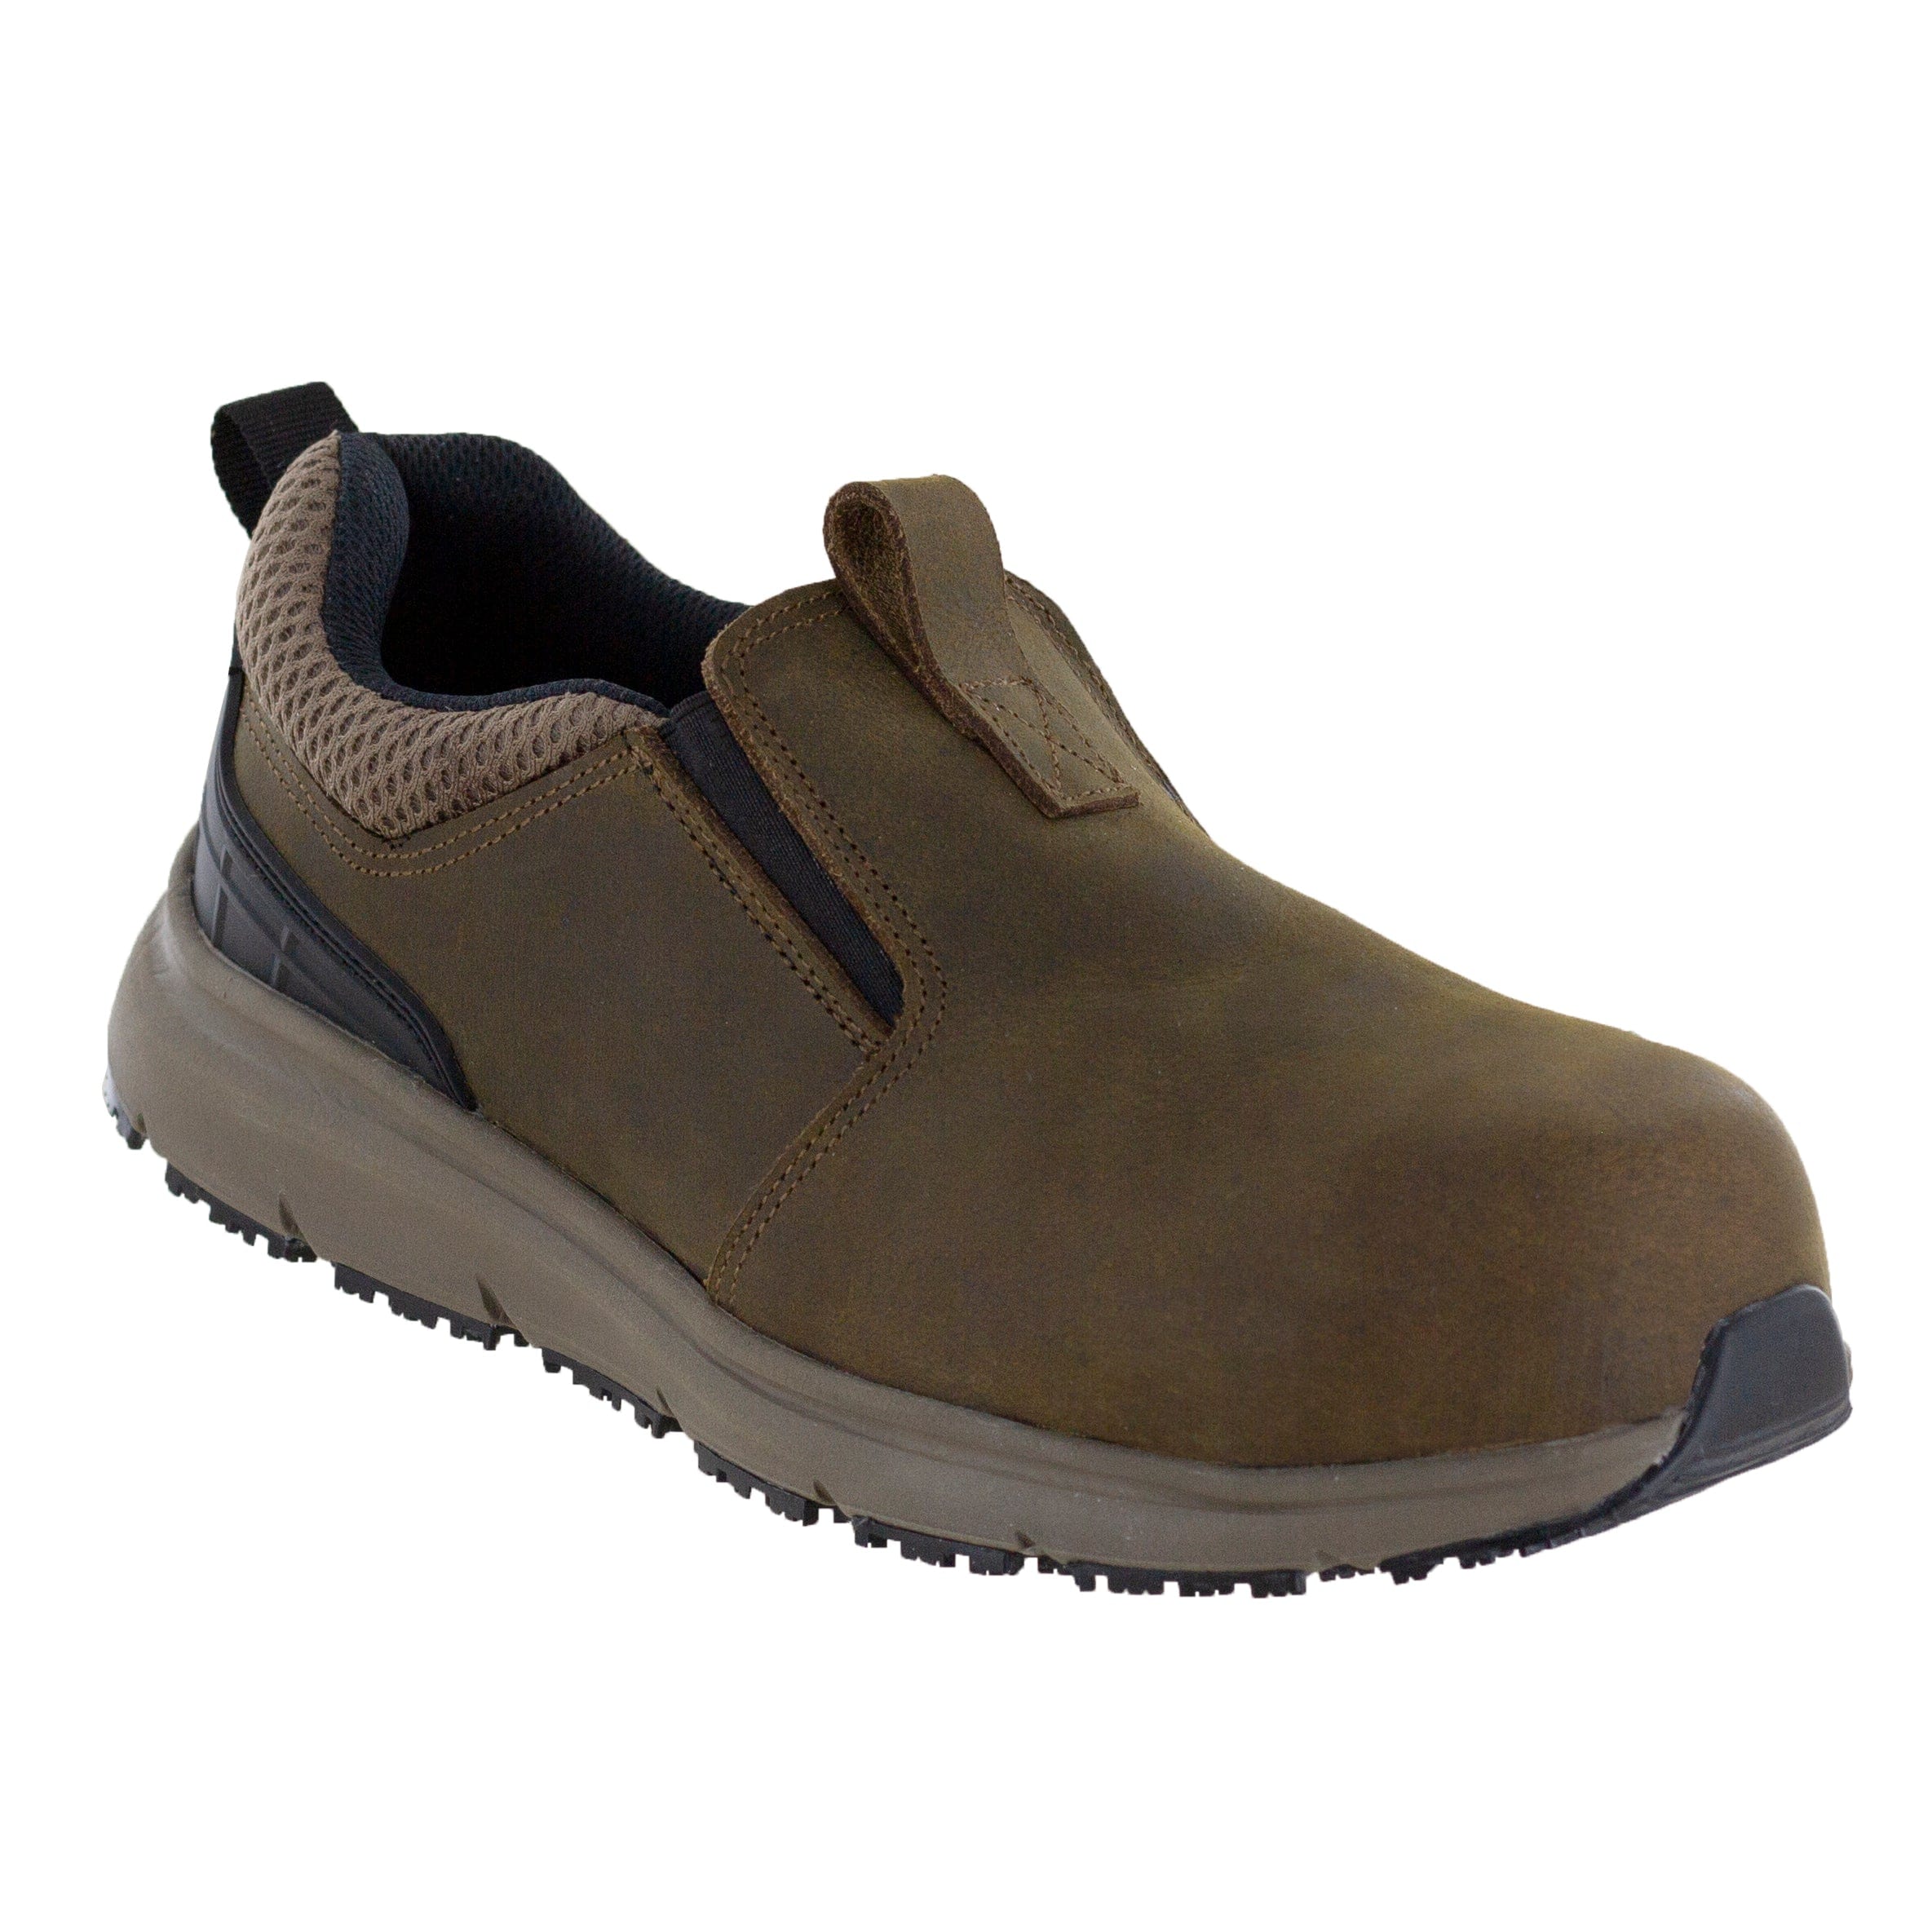 Lightweight slip-on carbon fiber toe work shoes for men